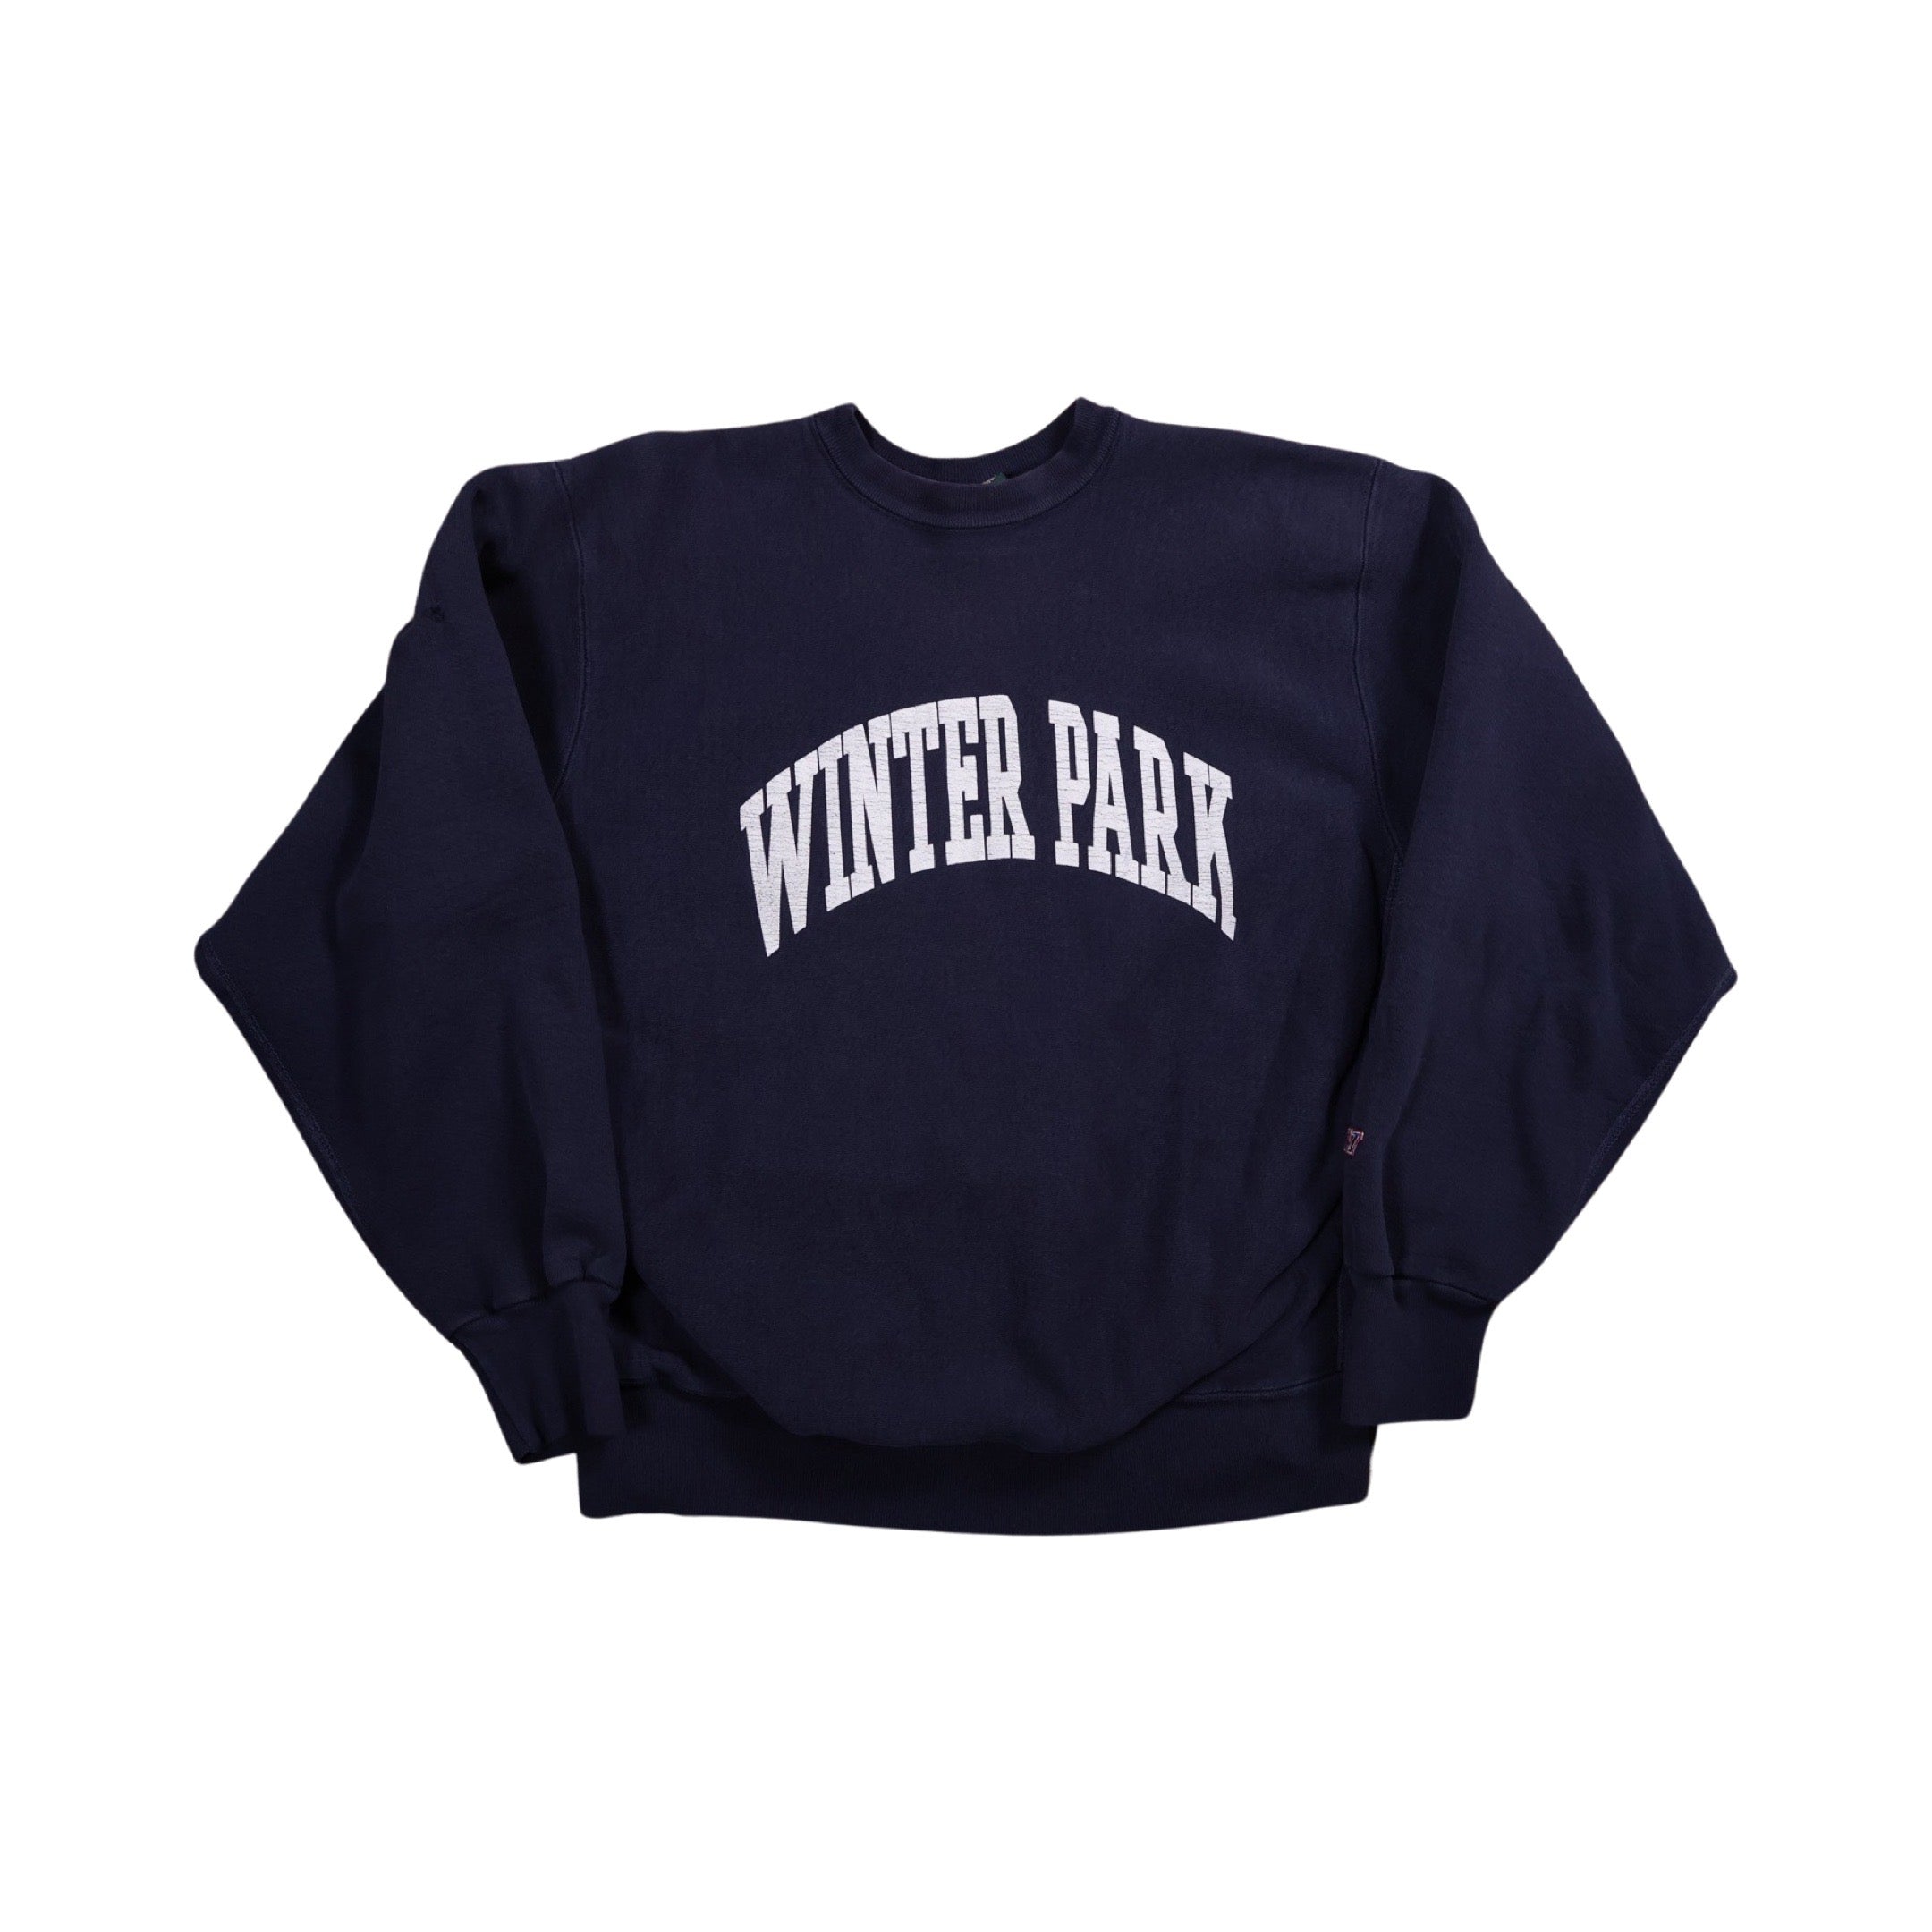 Winter Park 90s Sweater (XL)